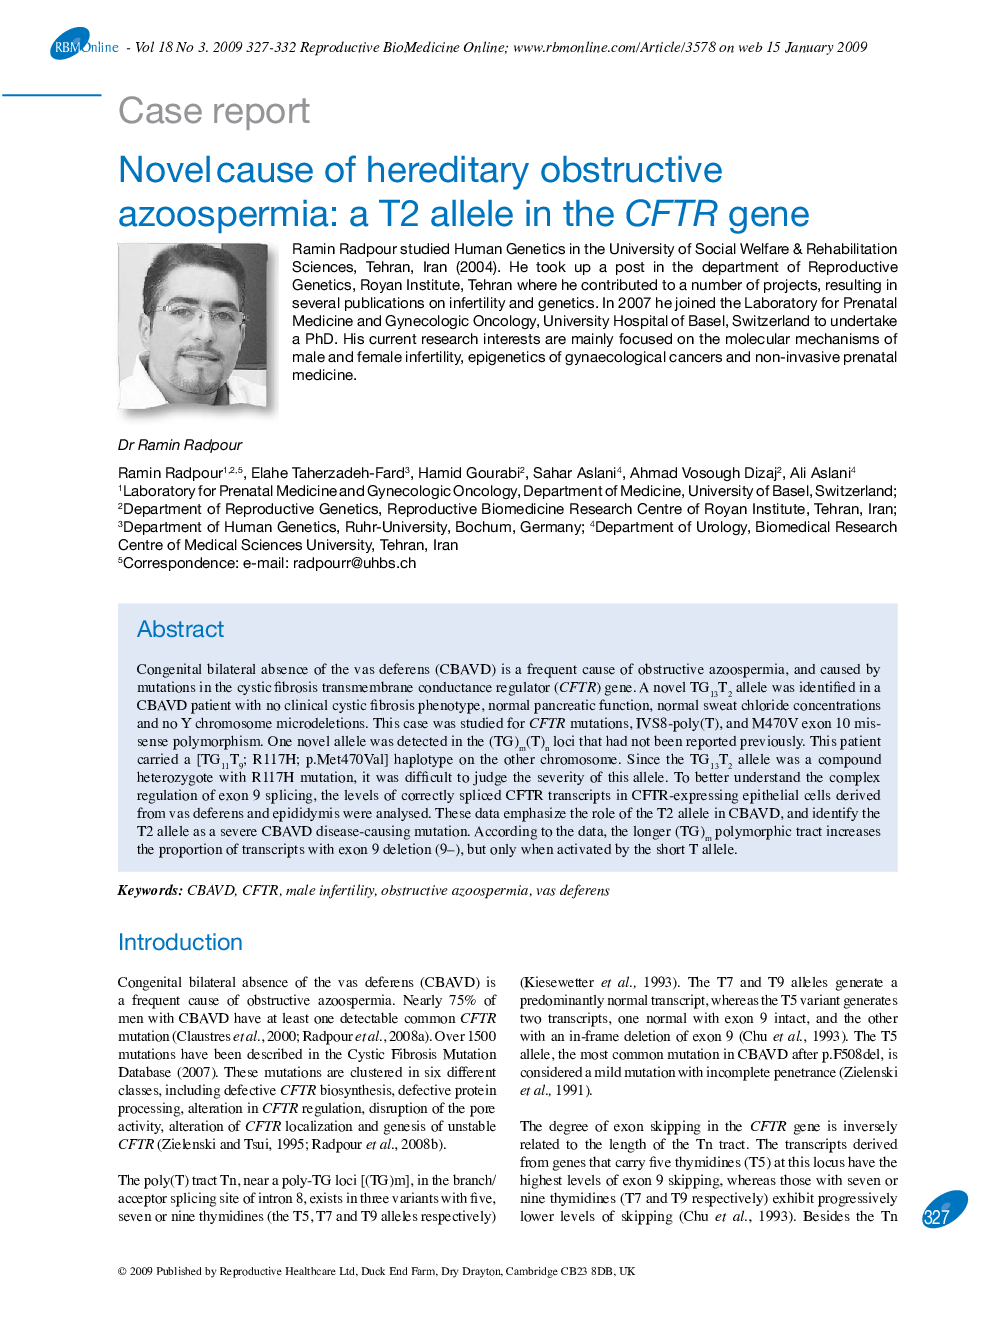 Novel cause of hereditary obstructive azoospermia: a T2 allele in the CFTR gene 